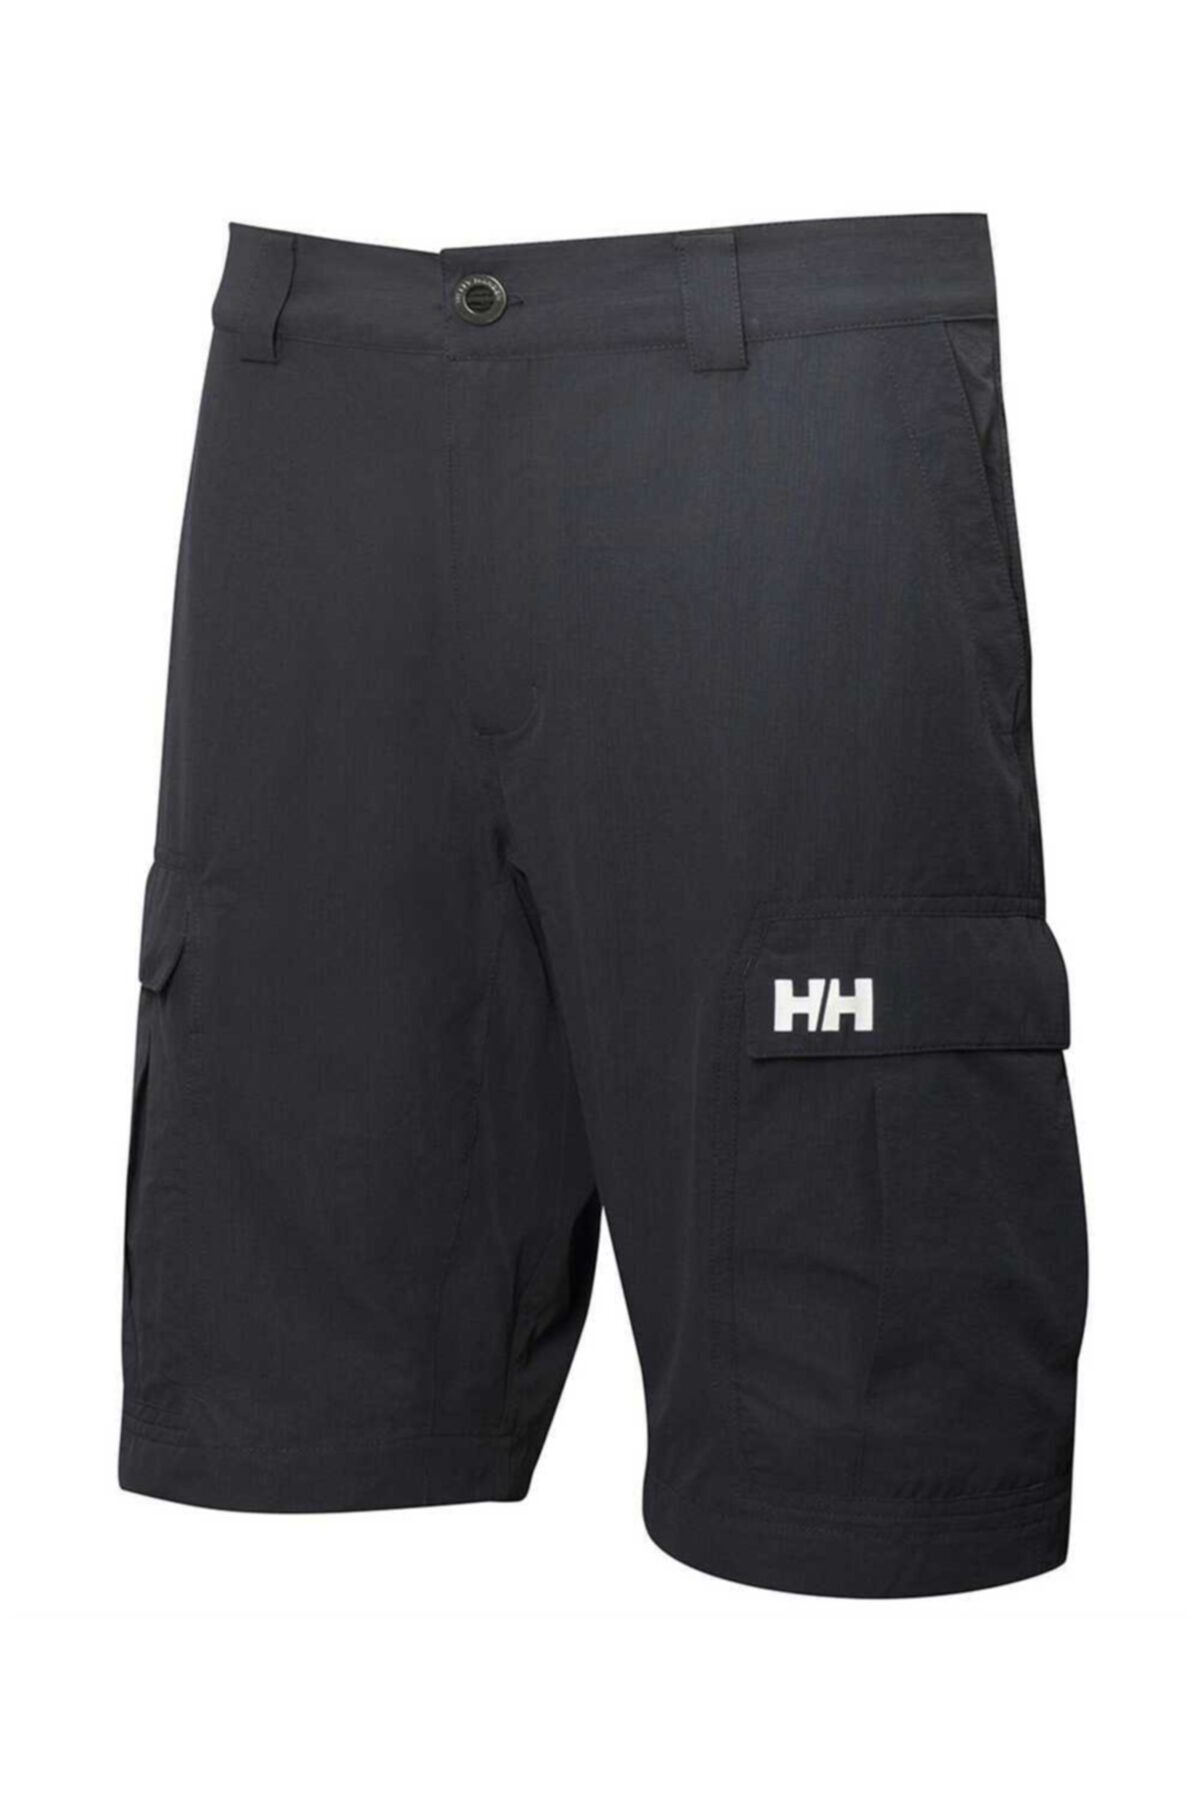 Helly Hansen Hh Hh Qd Cargo Shorts 11